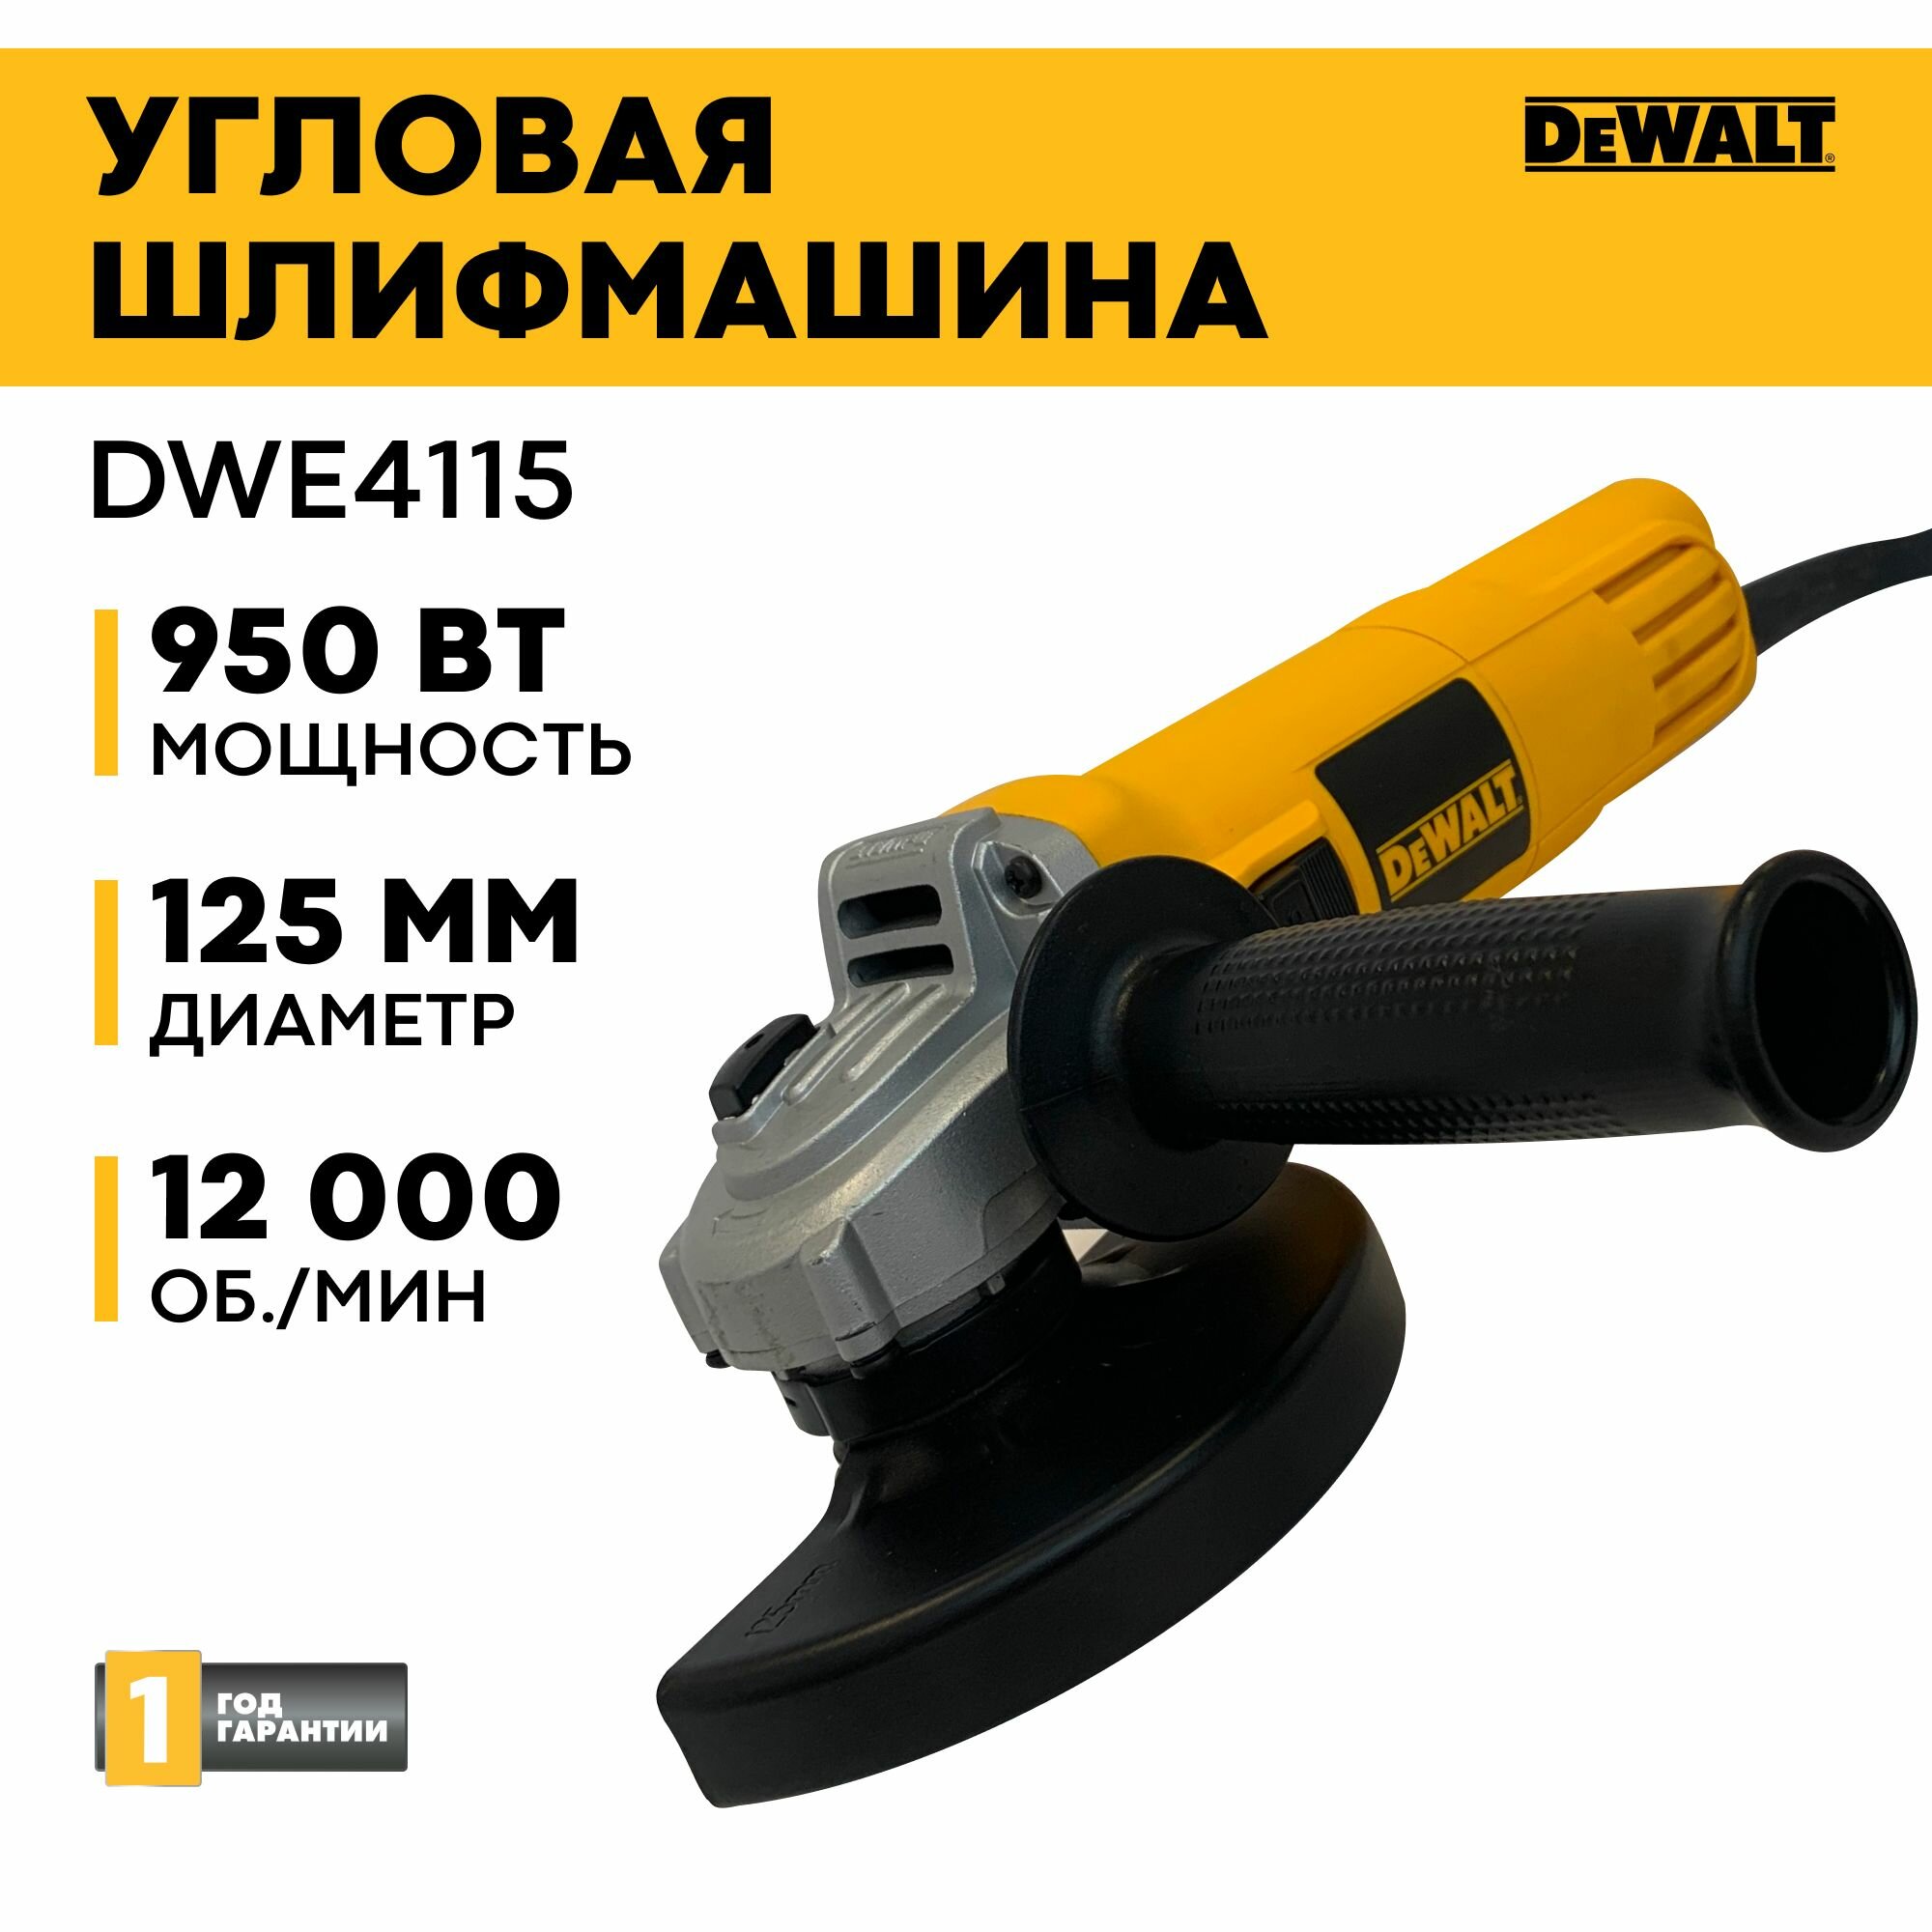 Угловая шлифмашина (болгарка) DeWalt DWE4115, 950 Вт, 125 мм, 12000 об/мин